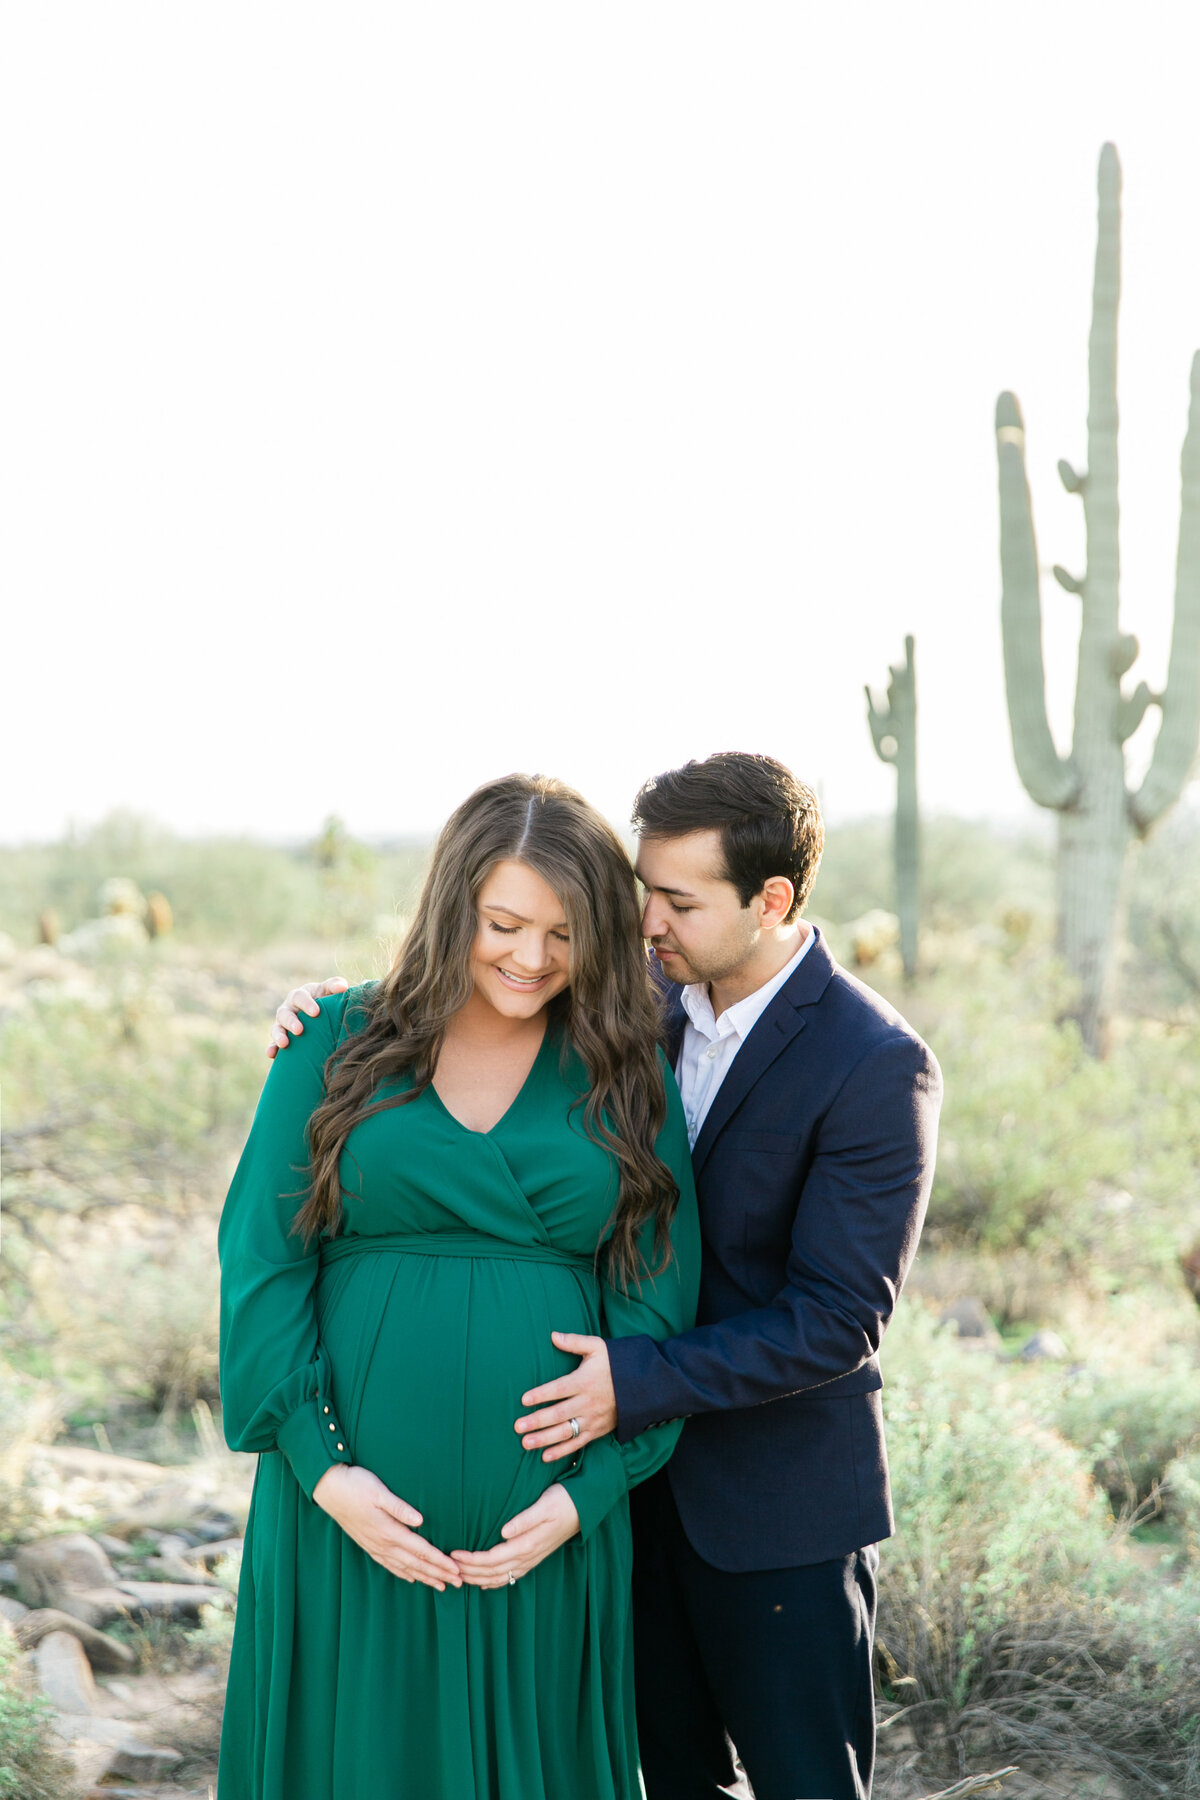 Karlie Colleen Photography - Scottsdale Arizona - Maternity Photos - Shelby & Cris-18